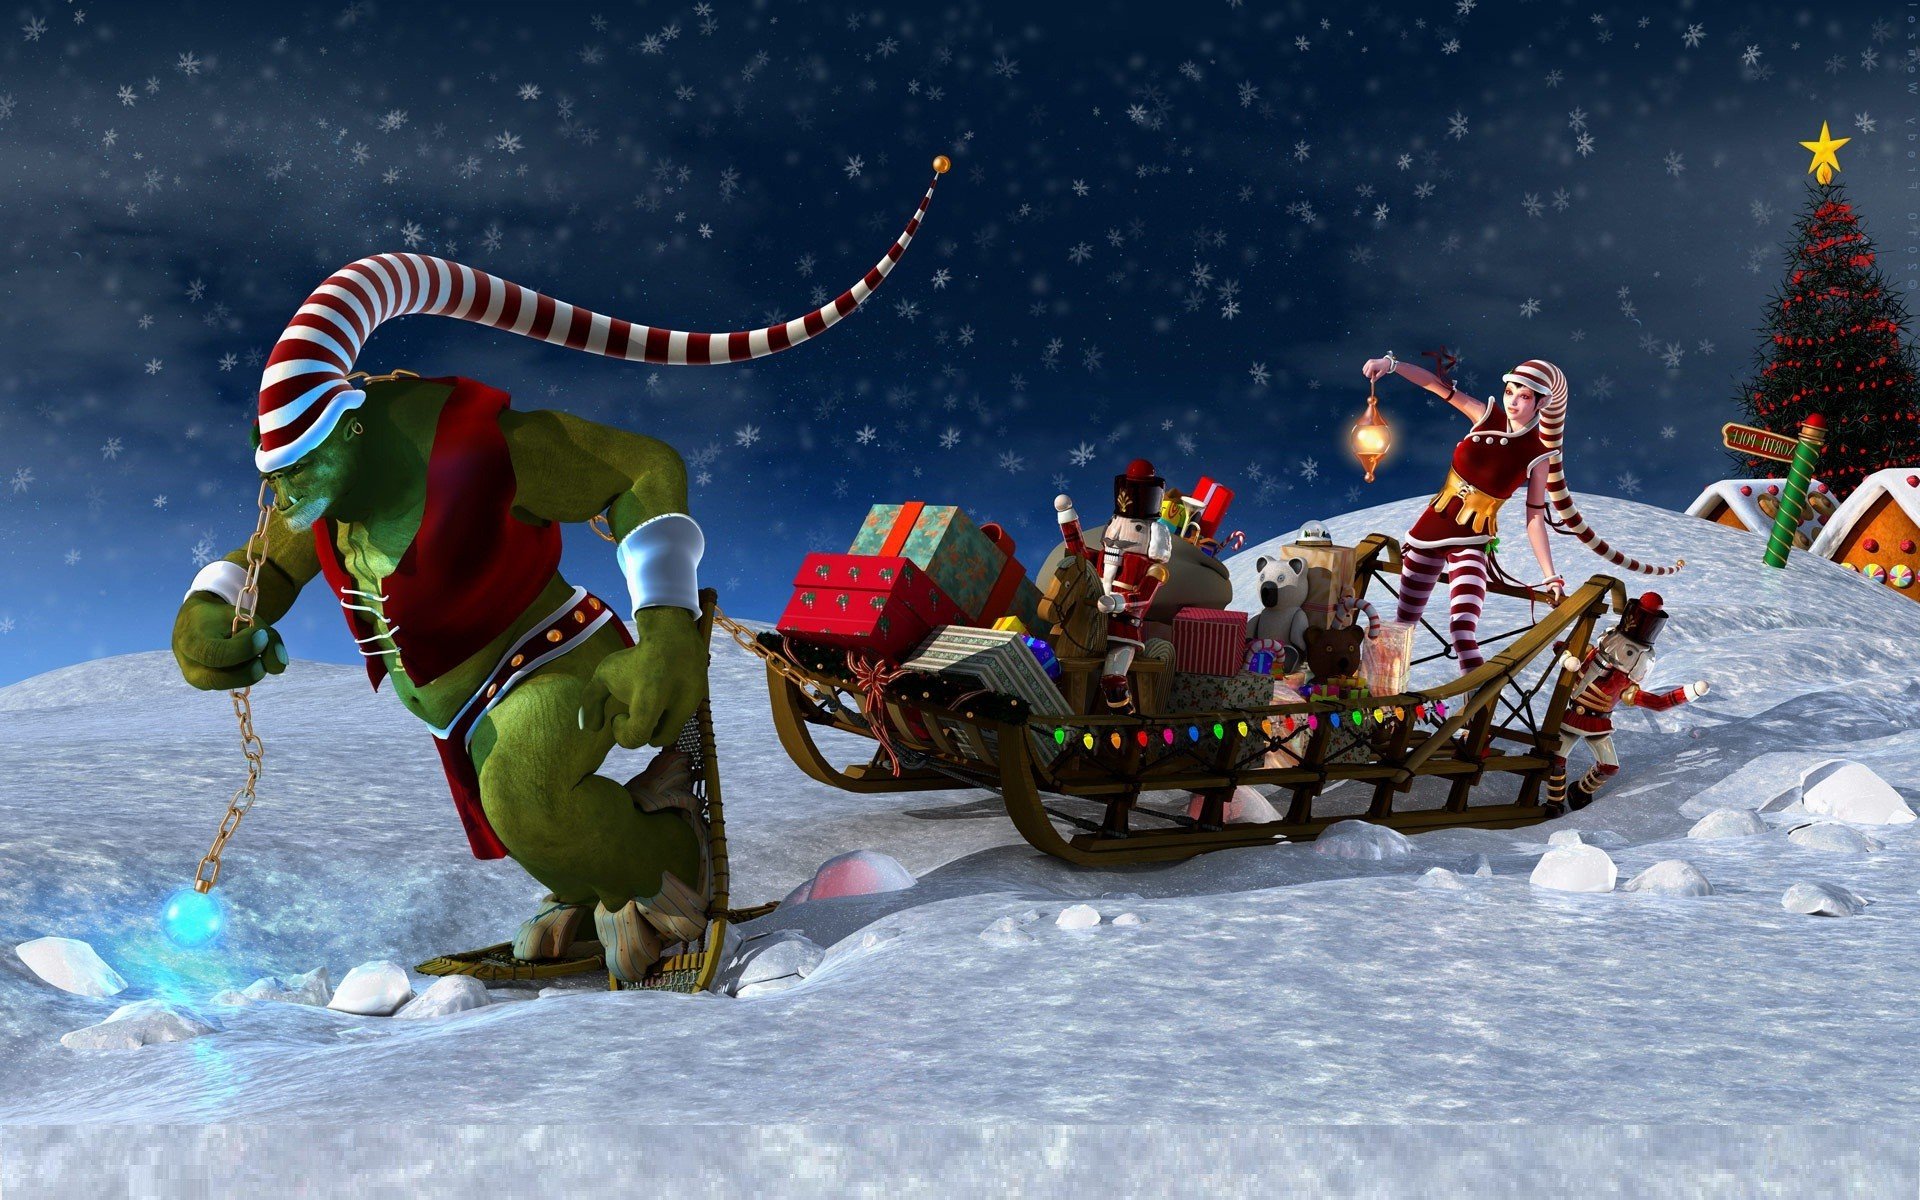 Animated Christmas Backgrounds For Desktop 17359 Wallpaper